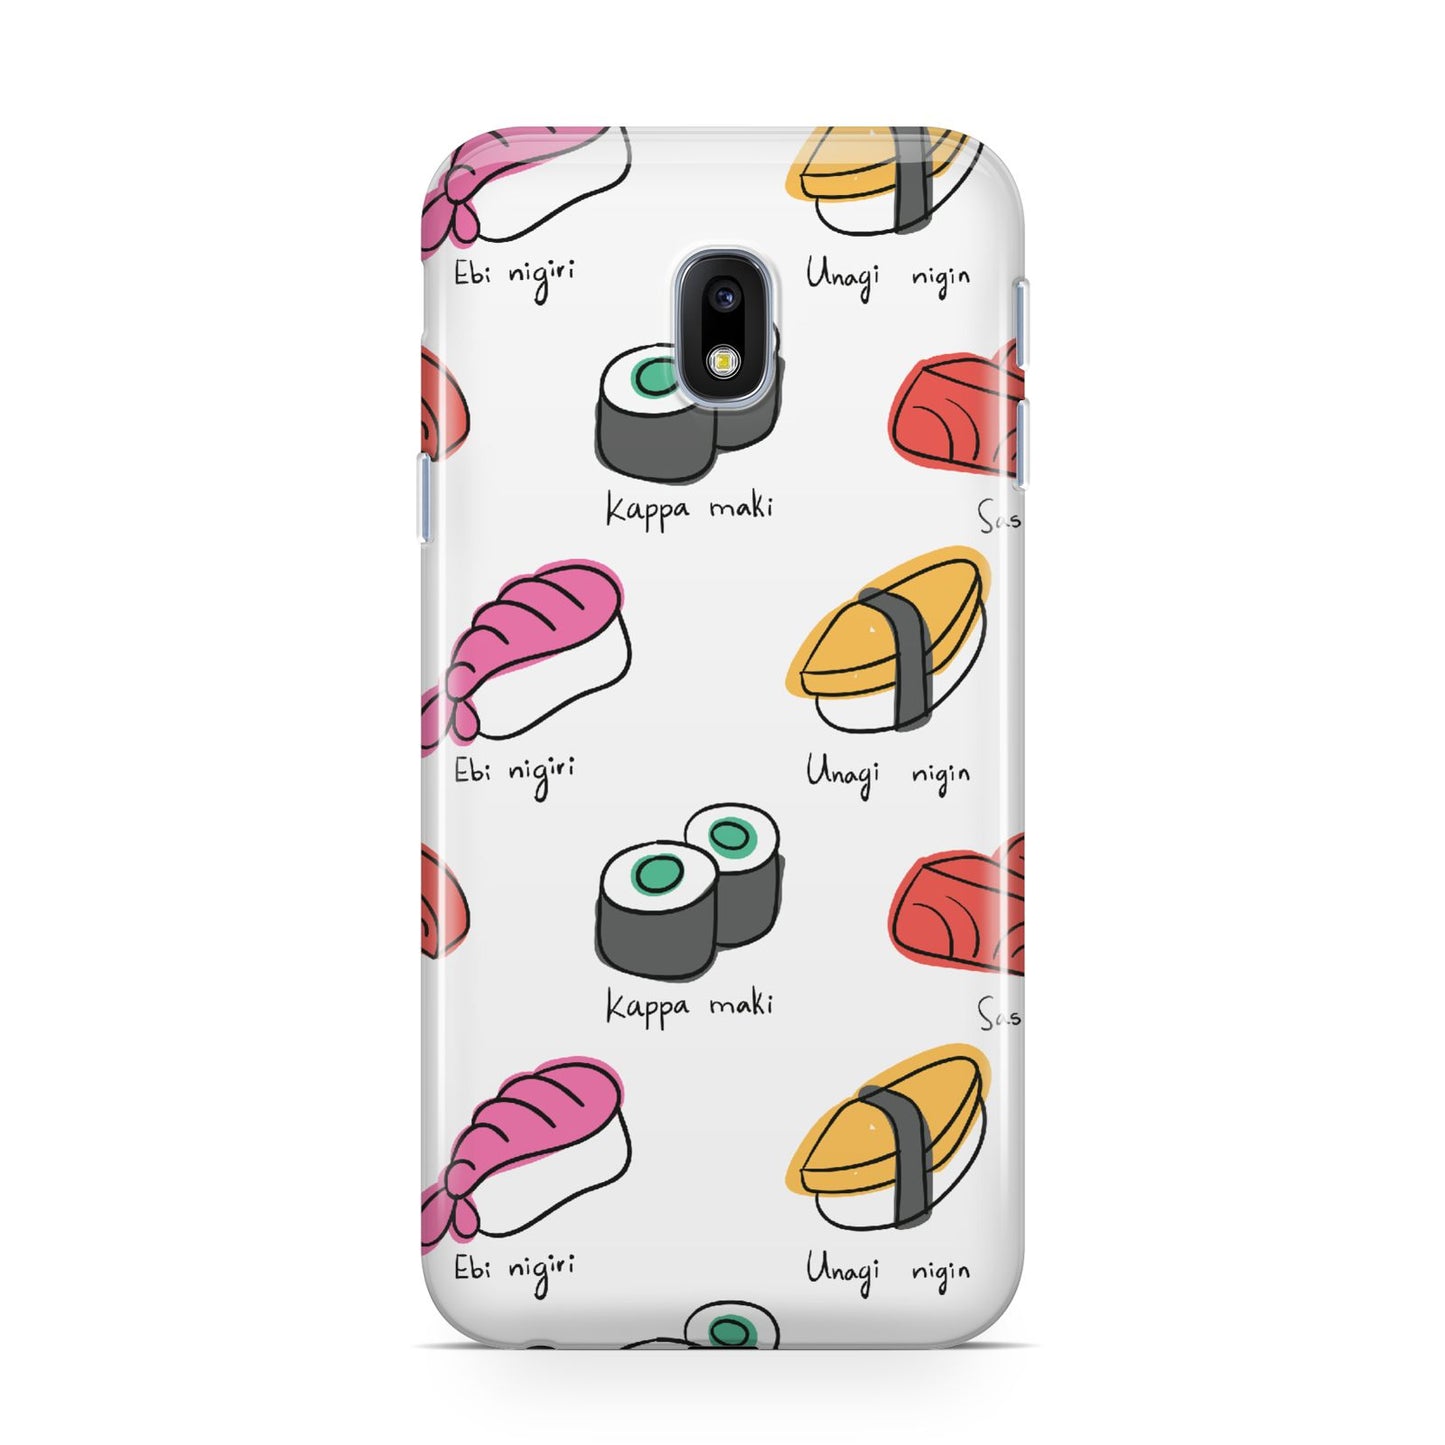 Sashimi Kappa Maki Sushi Samsung Galaxy J3 2017 Case